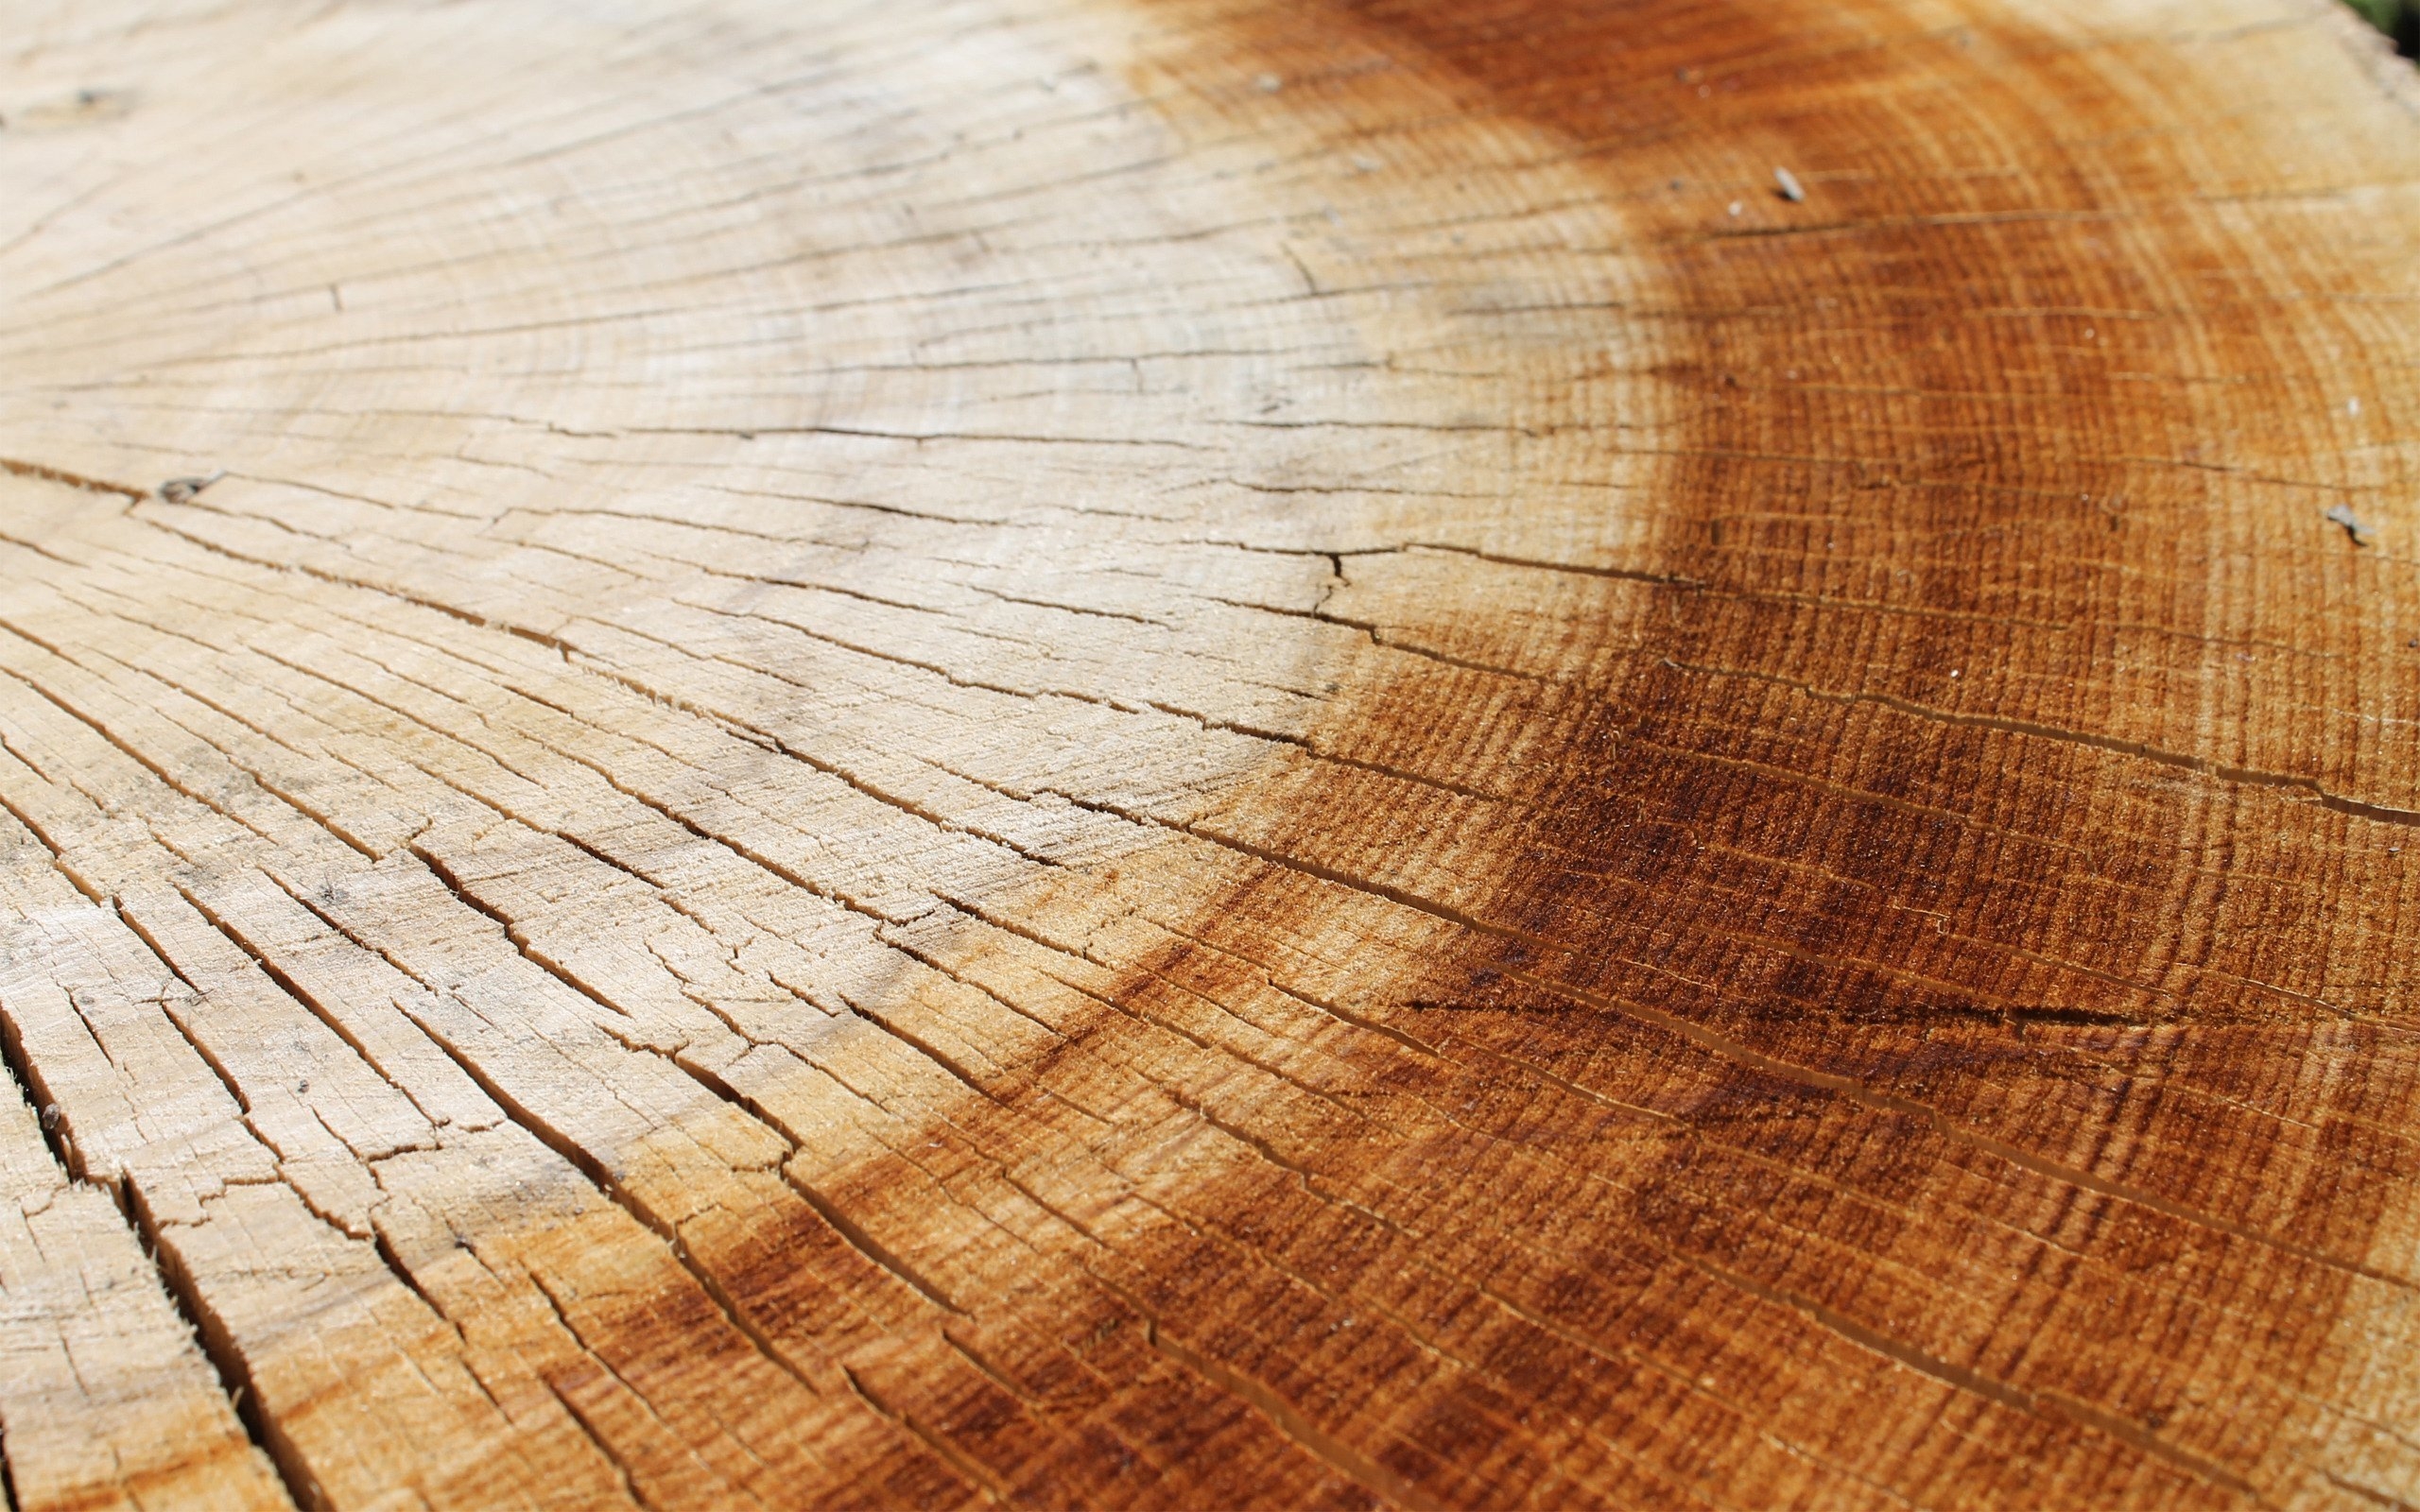 Внутренняя поверхность стола. Красивая текстура дерева. Фон дерево. Фактура дерева. Деревянная поверхность стола.